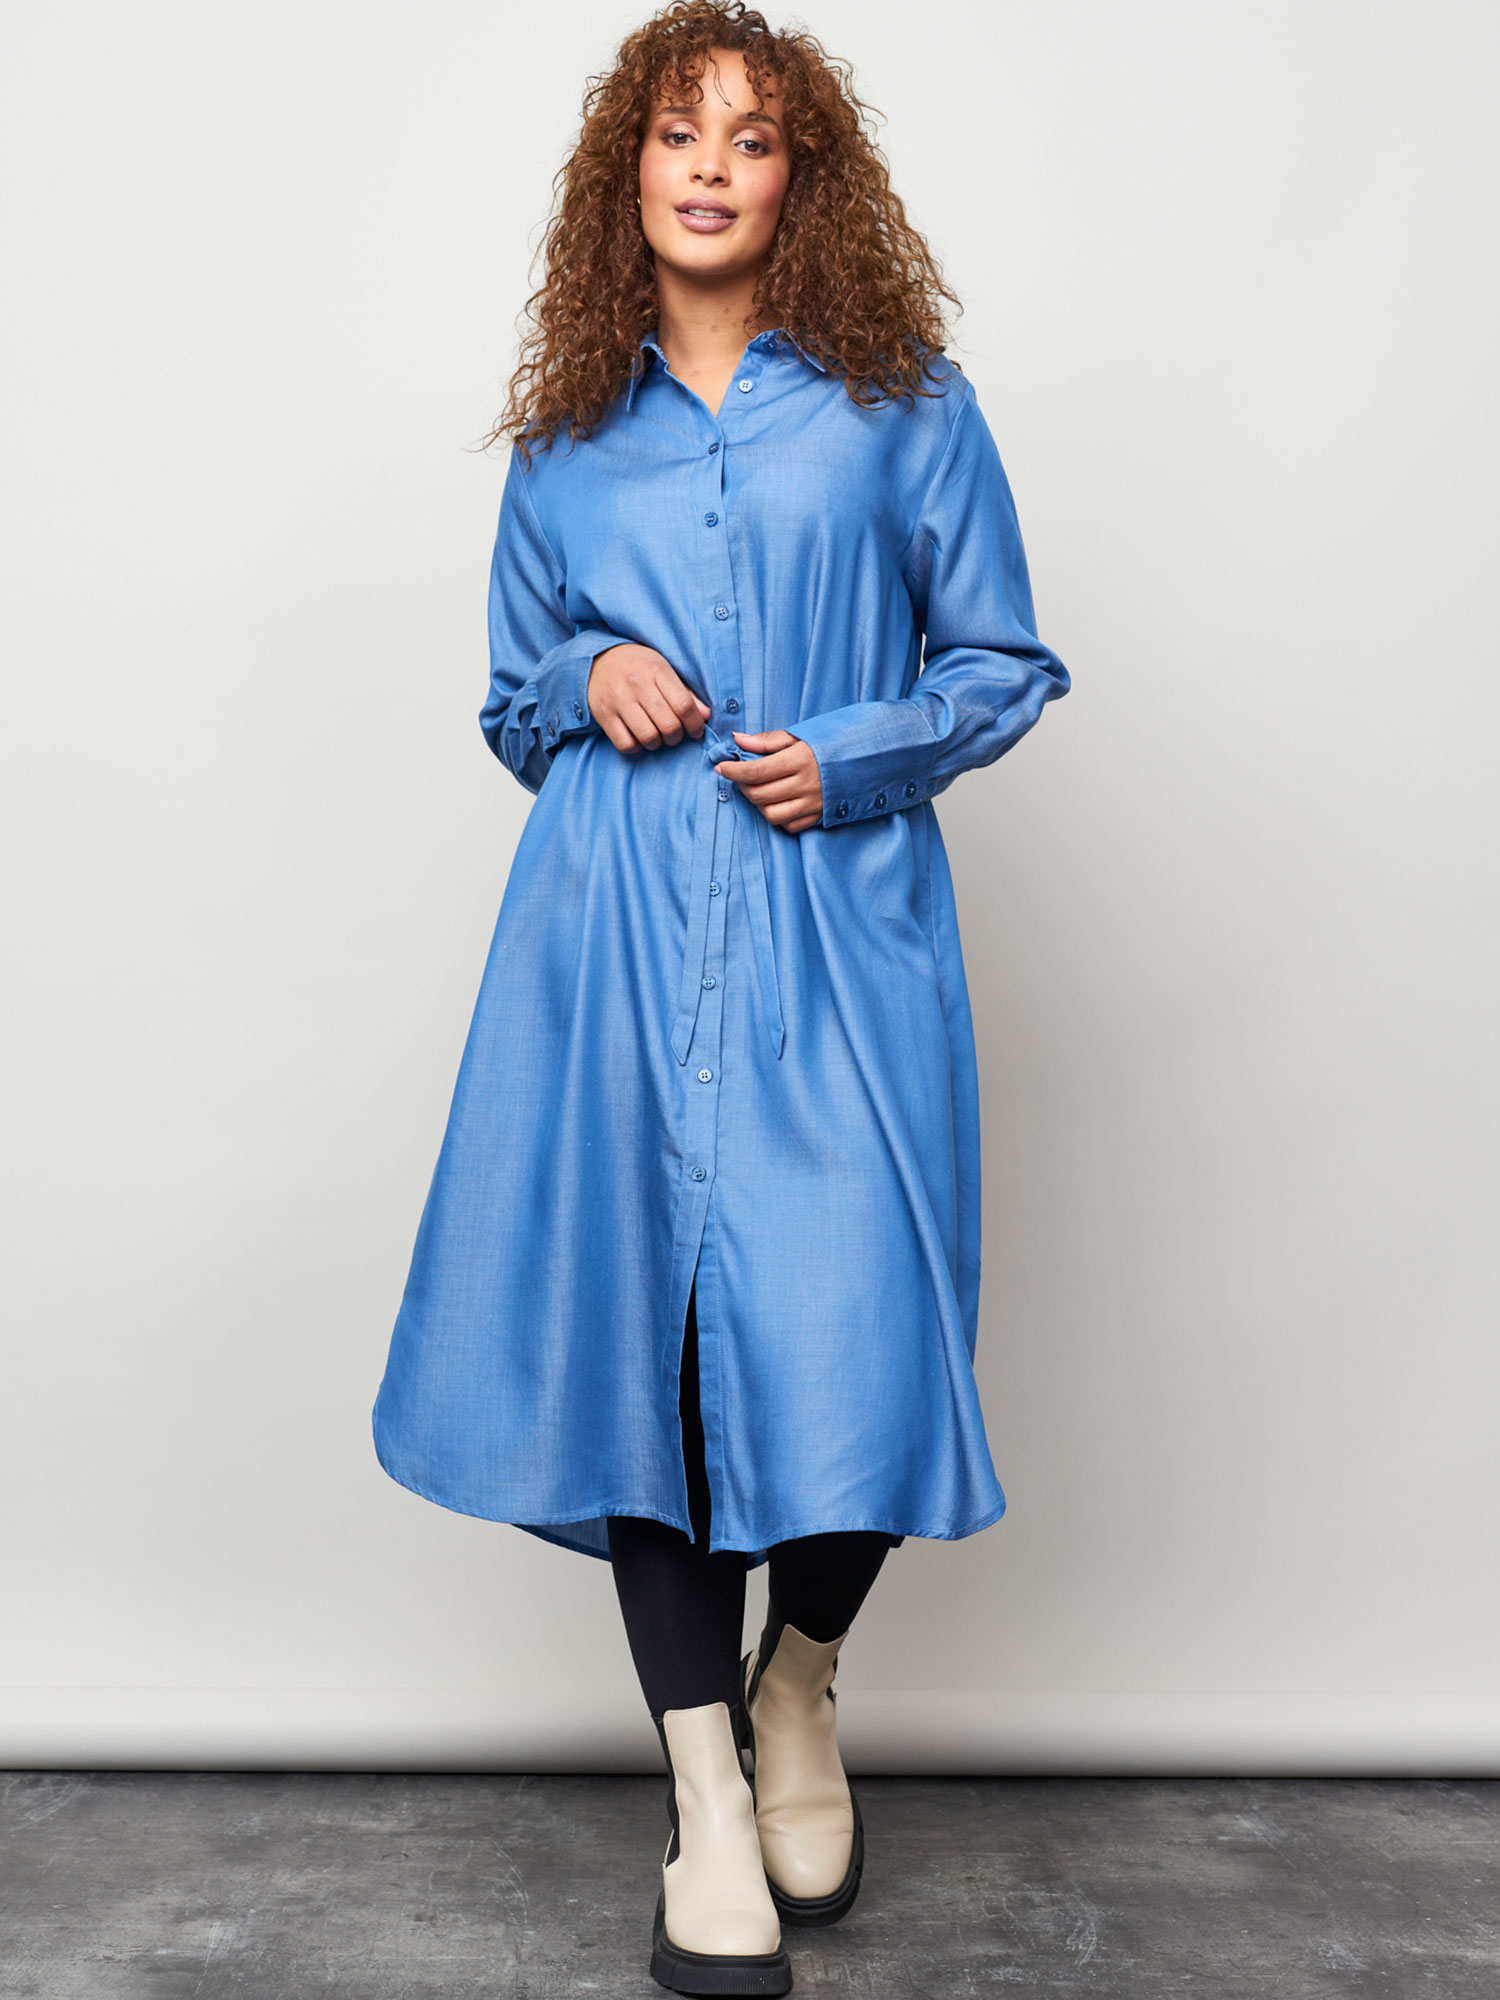 Lang blå skjortekjole i eksklusiv bæredygtig tencel kvalitet fra Aprico